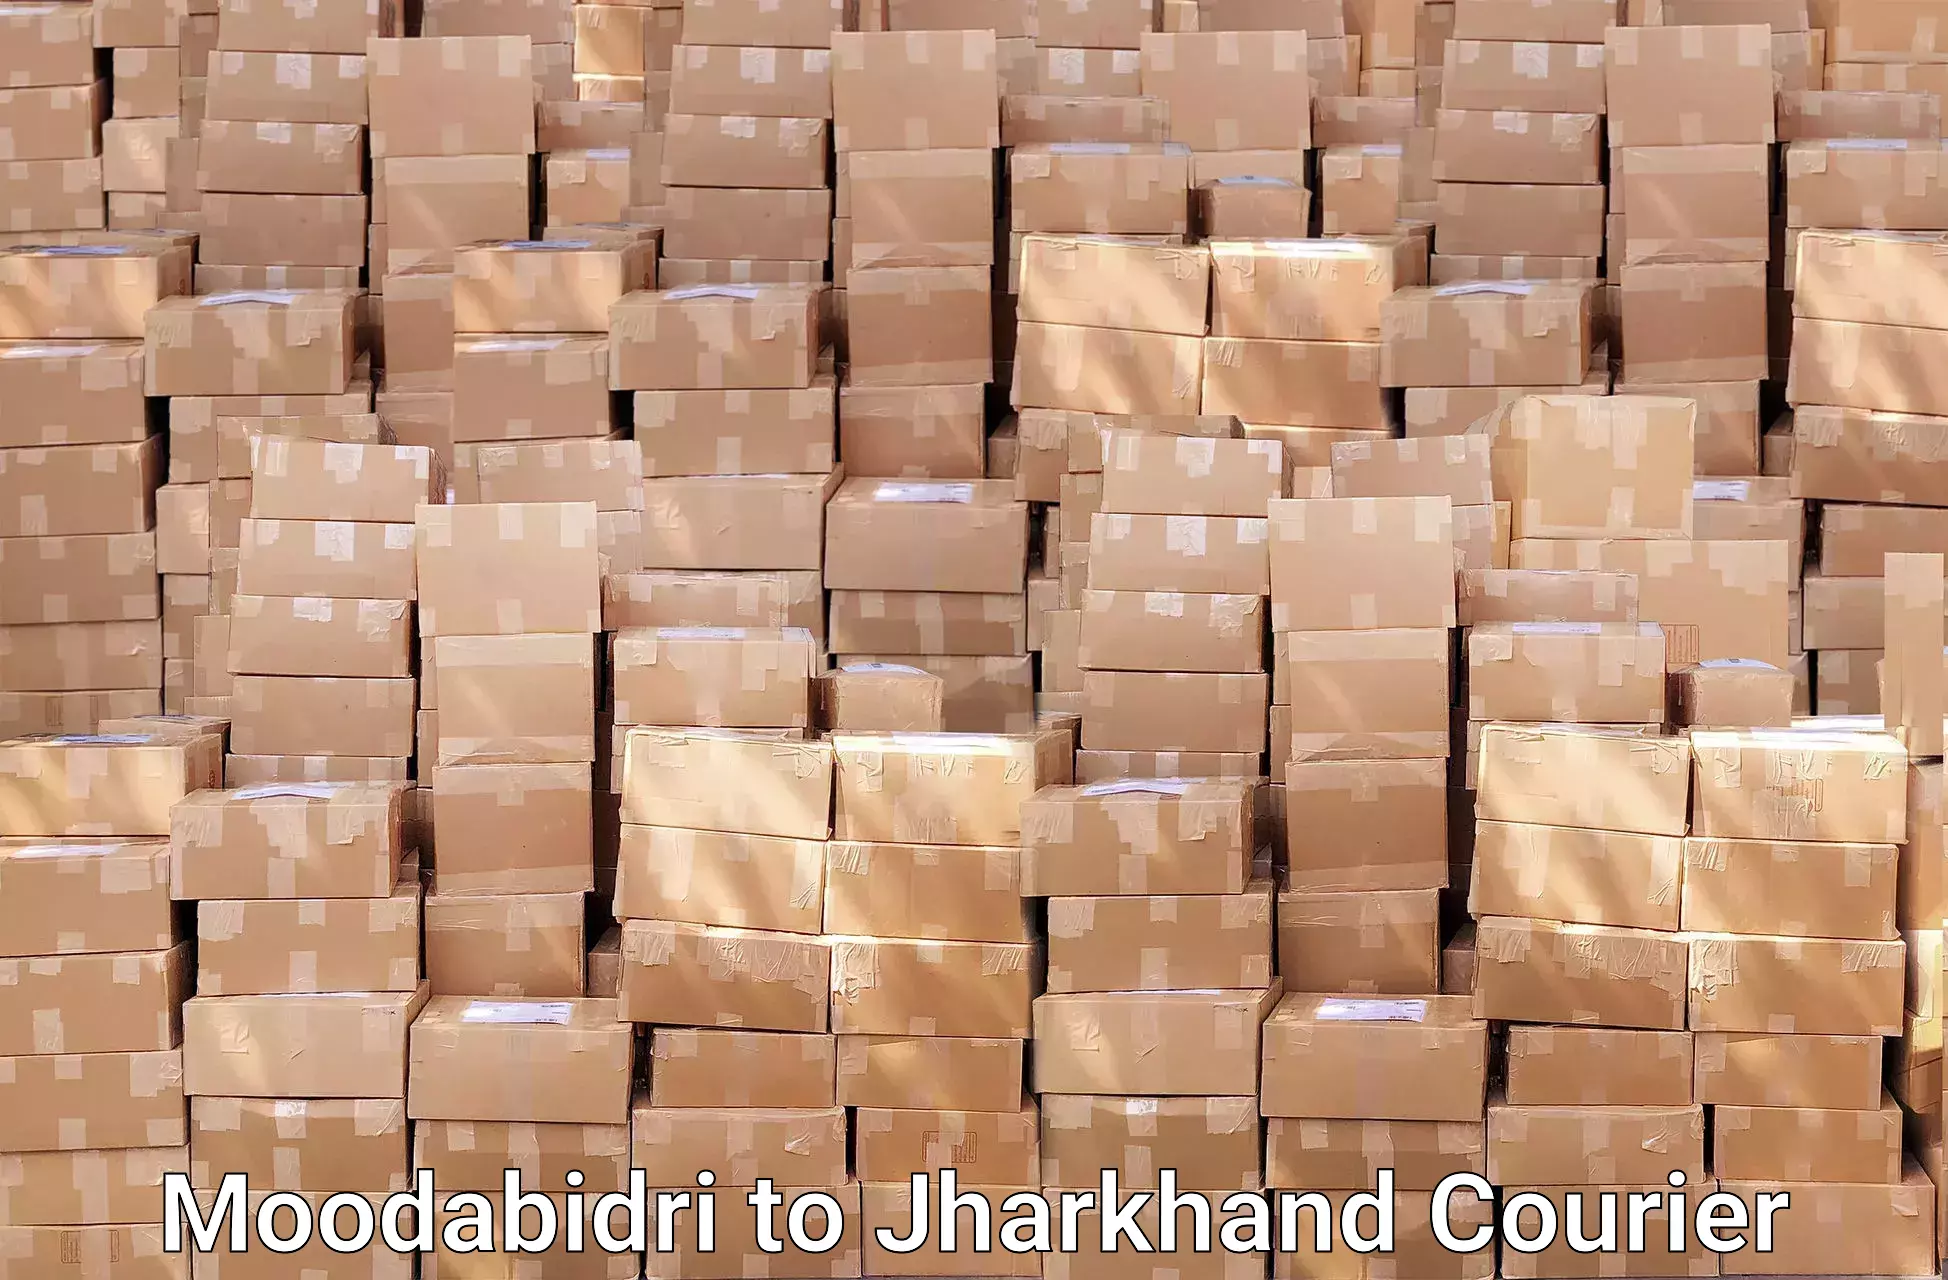 Quality moving and storage Moodabidri to Koderma